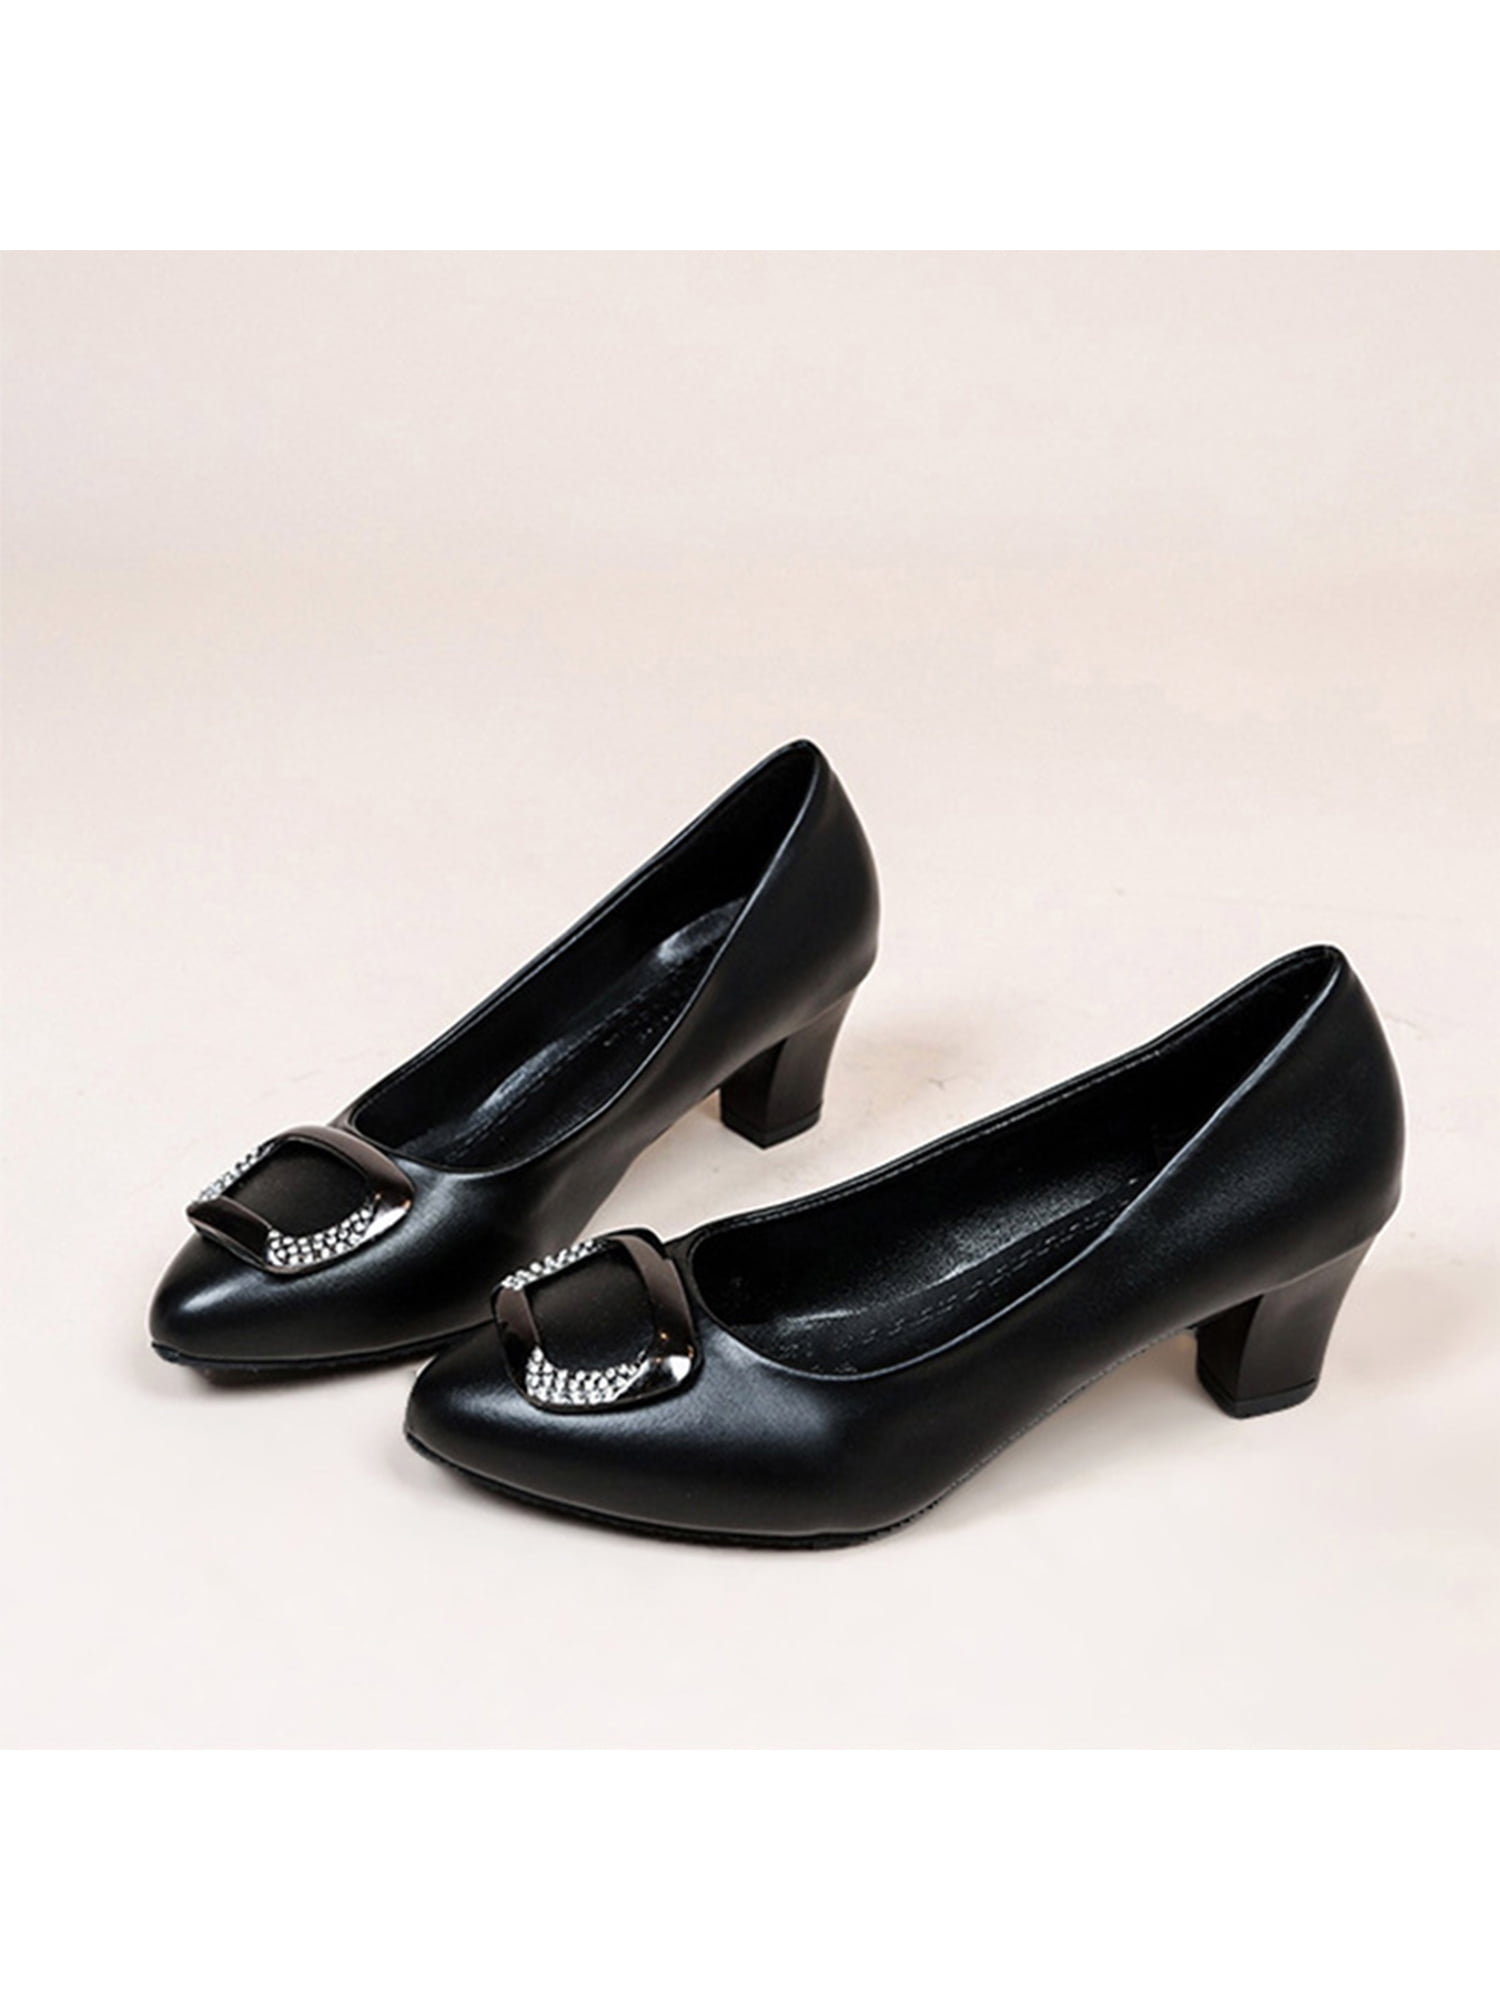 Women Mary Jane Low Block Heels Ankle Strap Buckle Ethnic Dance Shoes  Casual | eBay